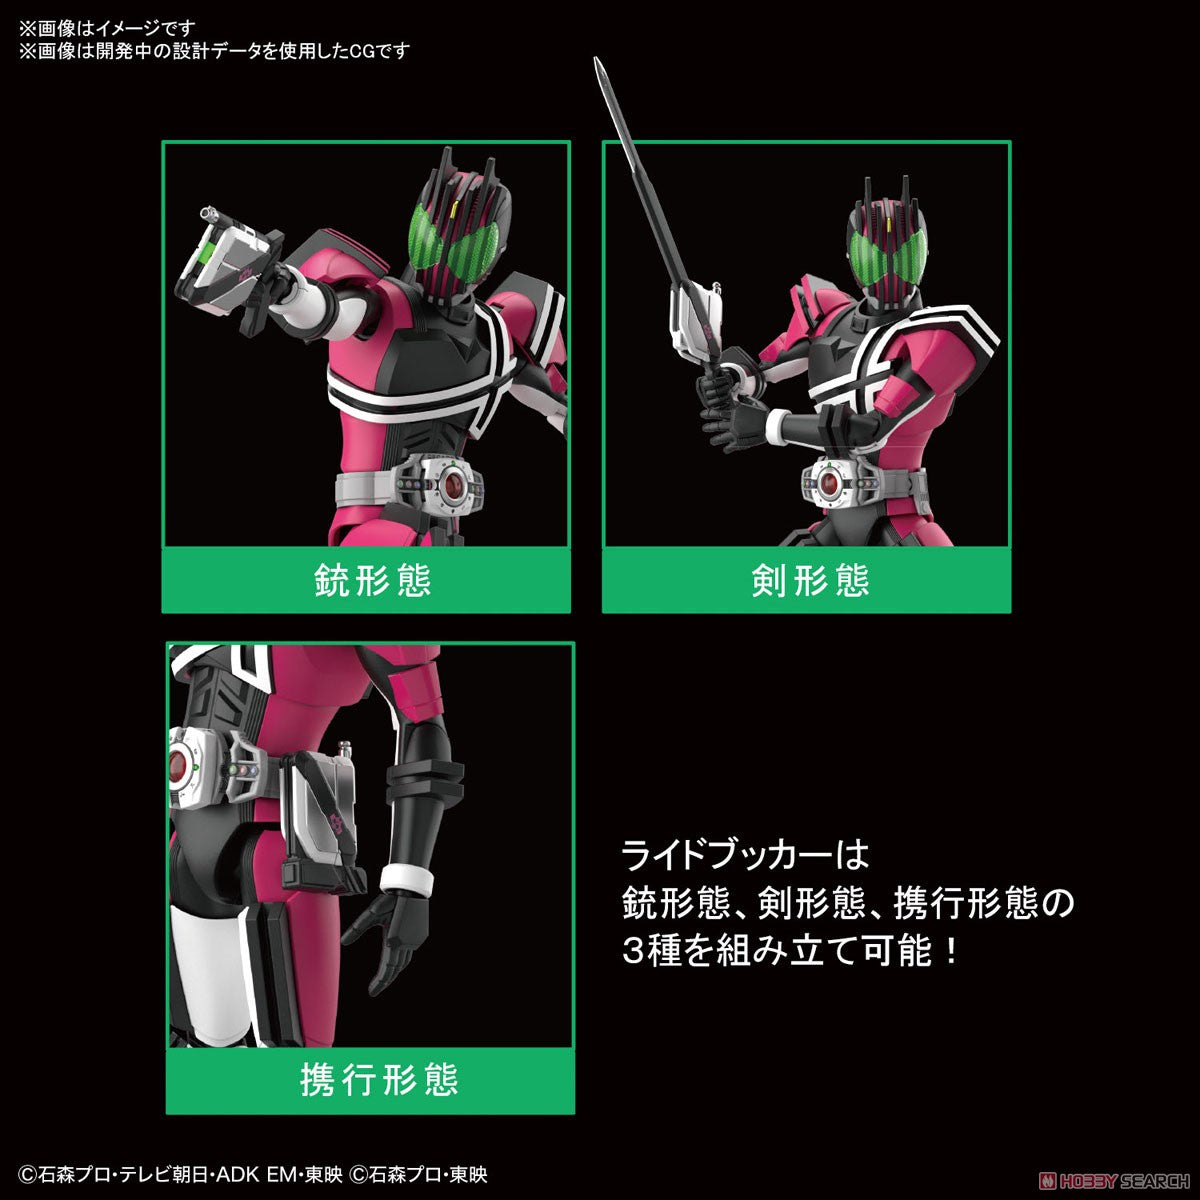 Kamen Raider Figure Rise Standard Kamen Rider DECADE-Bandai-Ace Cards &amp; Collectibles